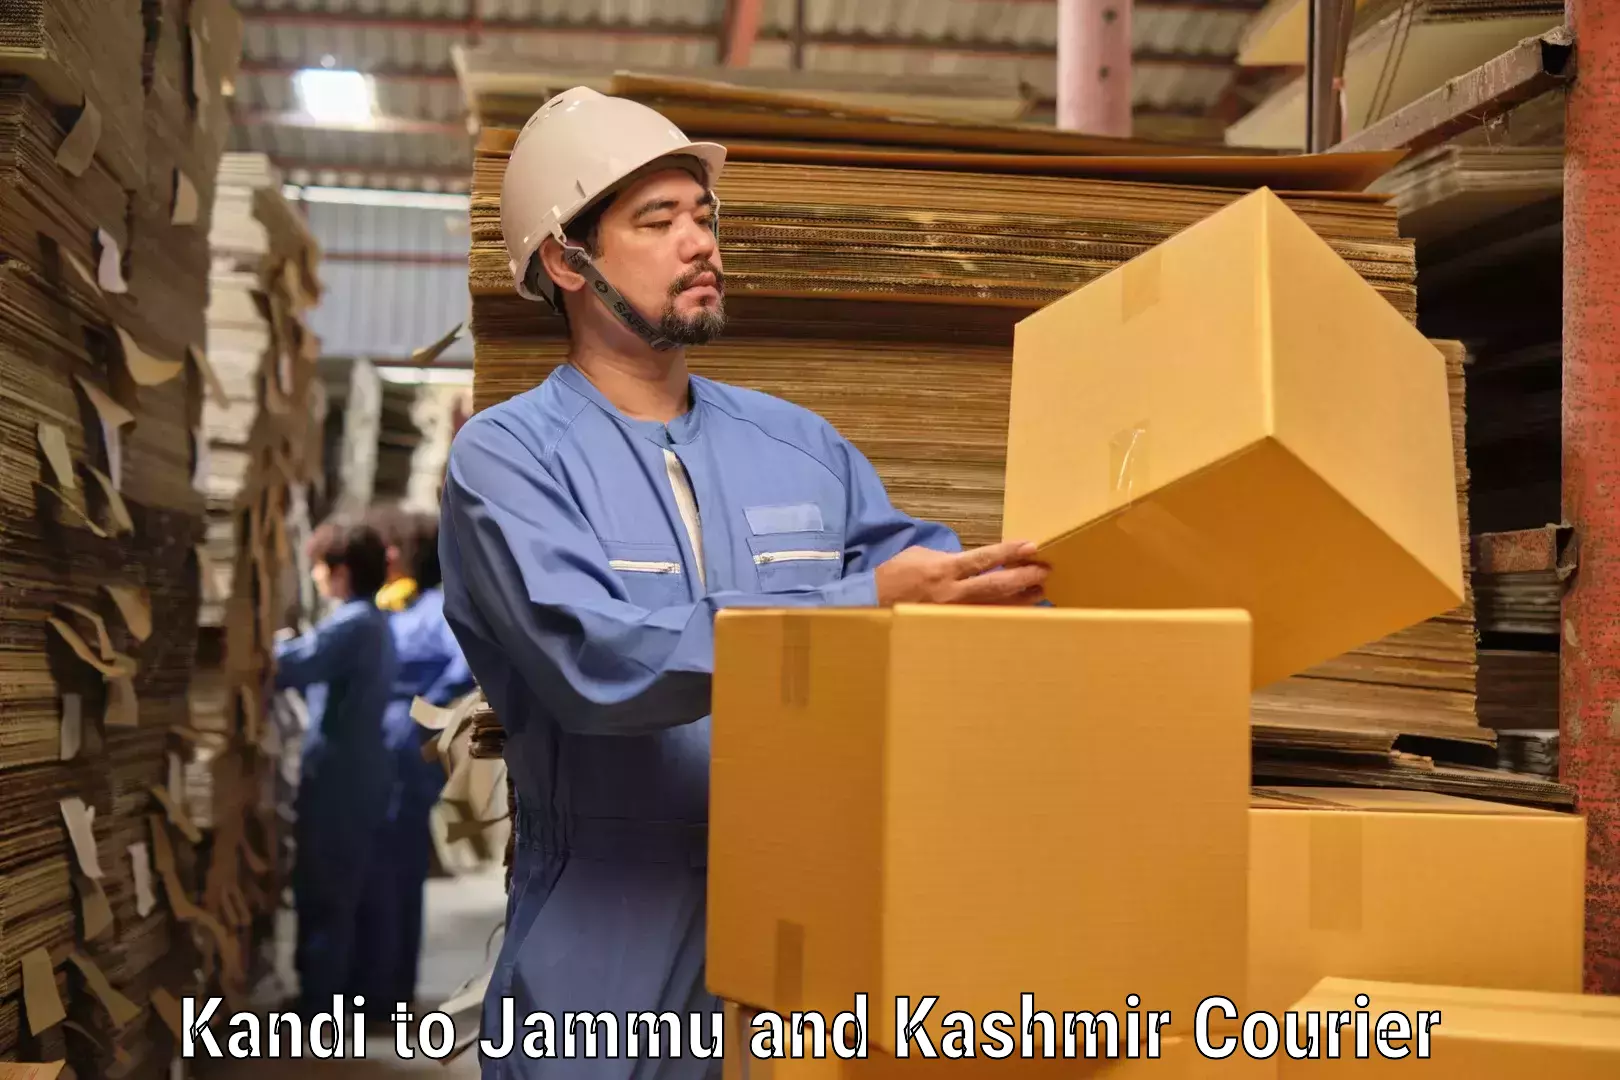 Next-day freight services Kandi to Srinagar Kashmir